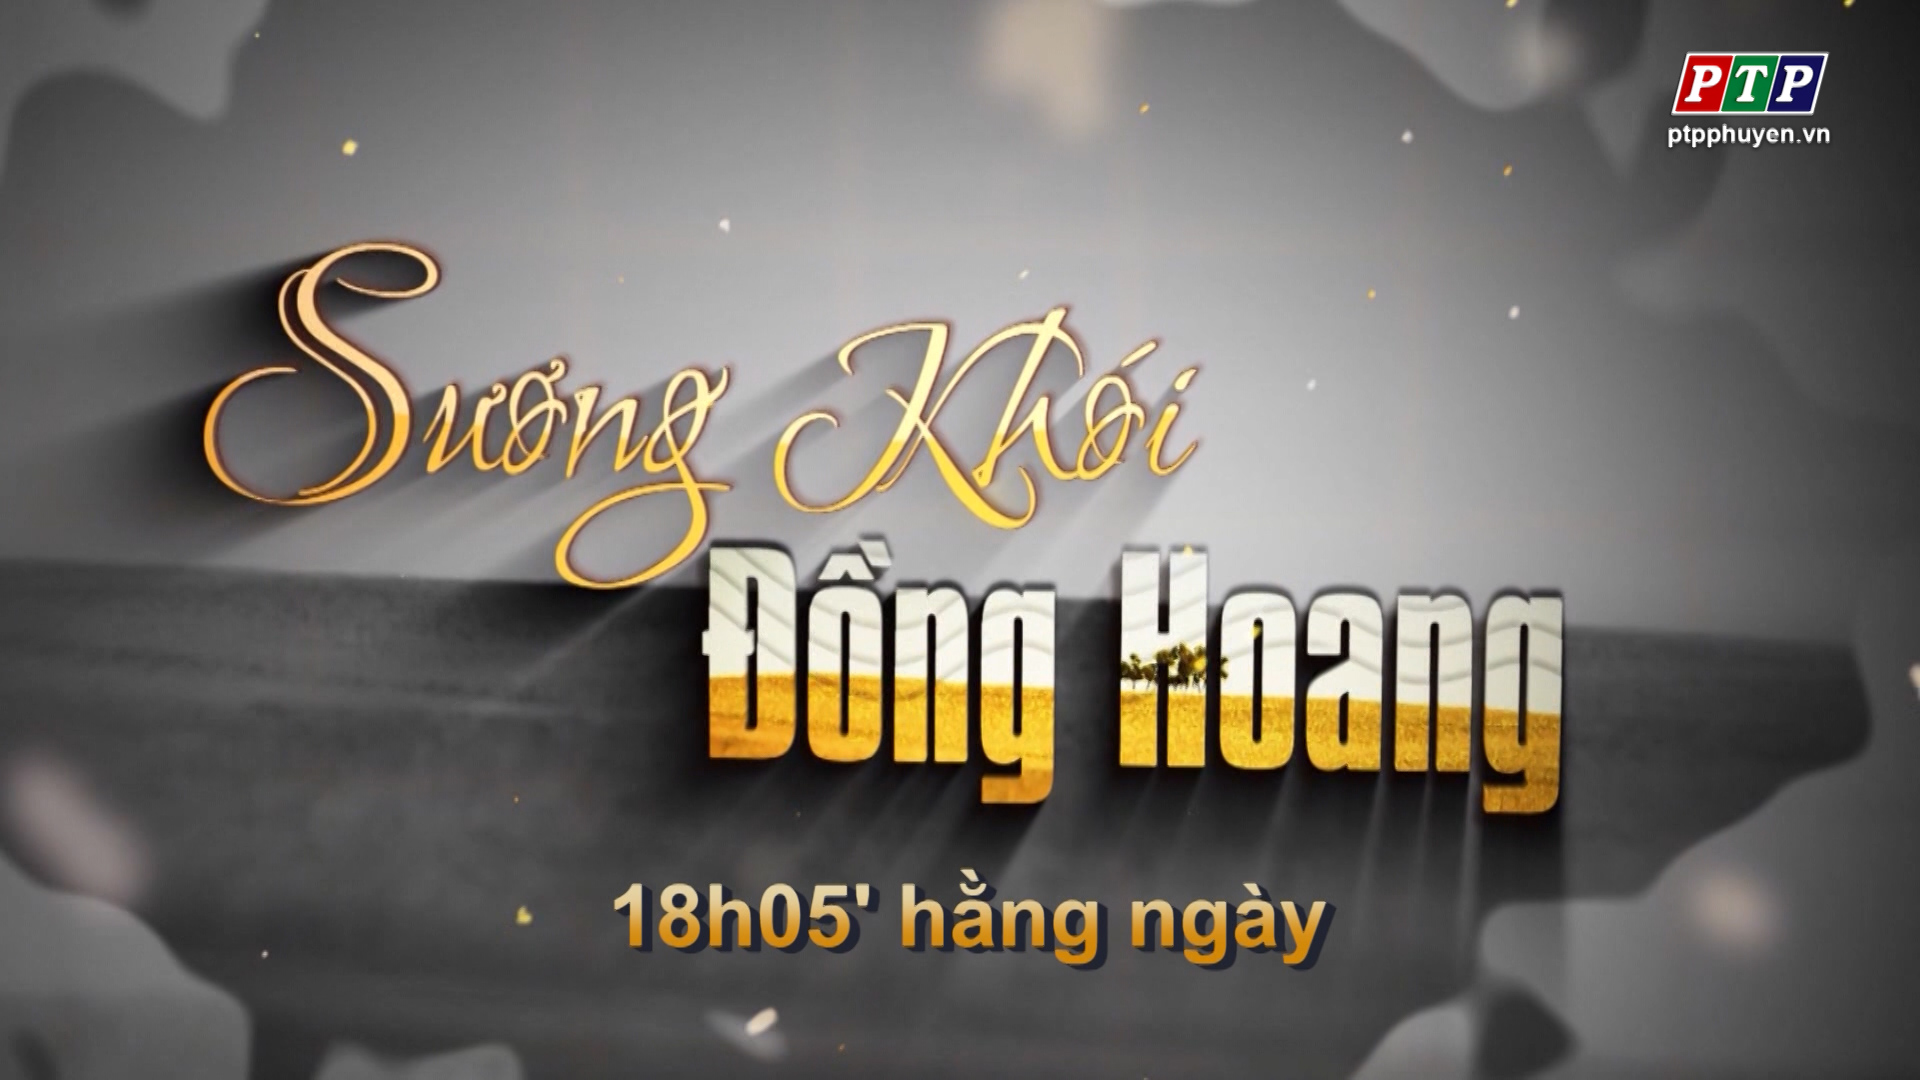 Trailer Film Sương Khói Đồng Hoang